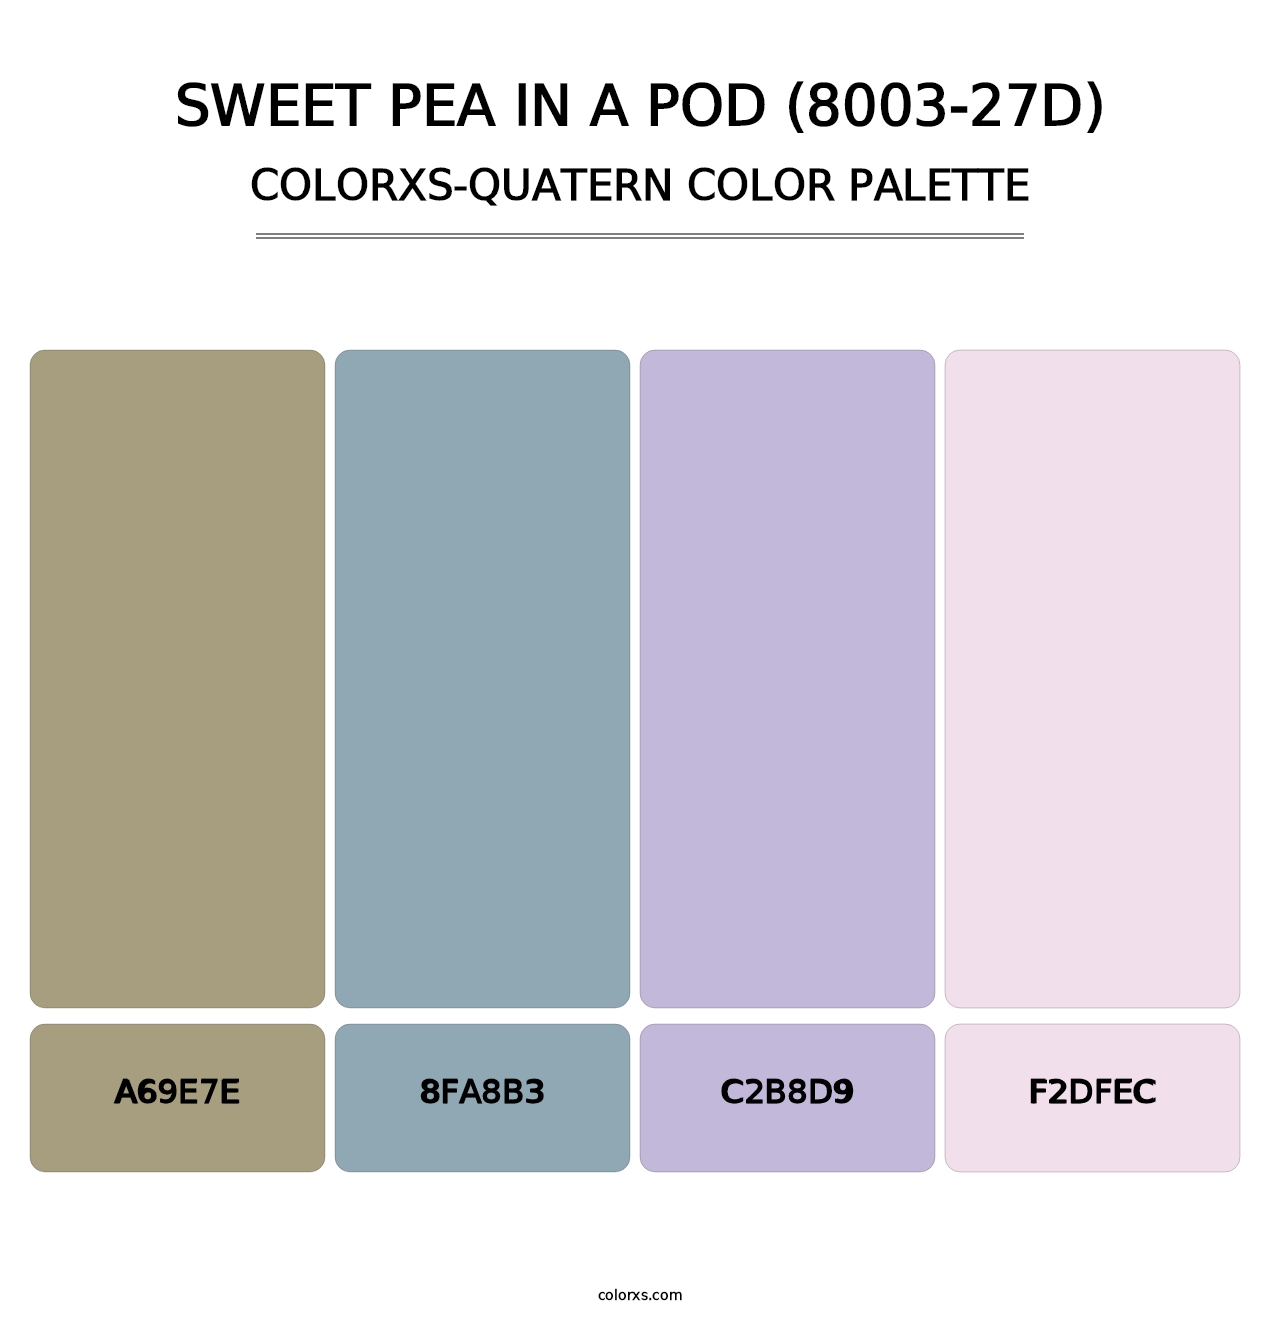 Sweet Pea in a Pod (8003-27D) - Colorxs Quatern Palette